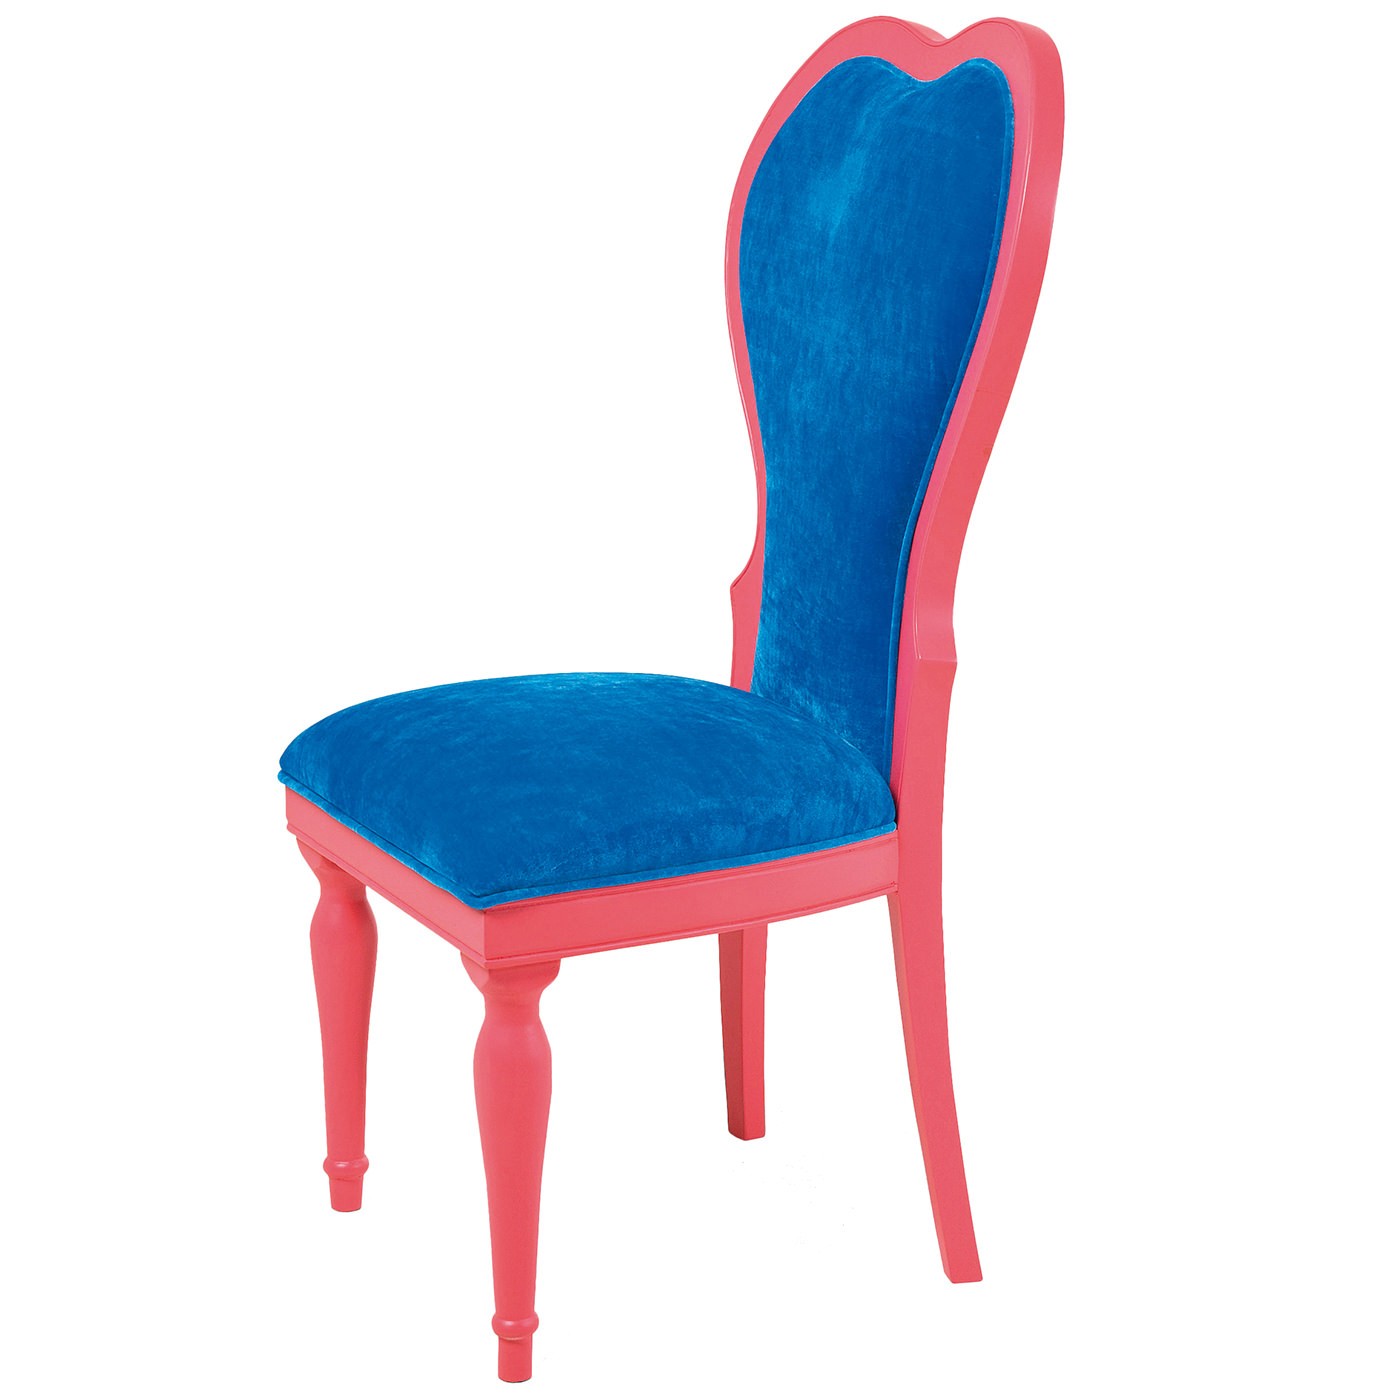 HI 1353 0093 – Upholstered Chair Wonderland (2)